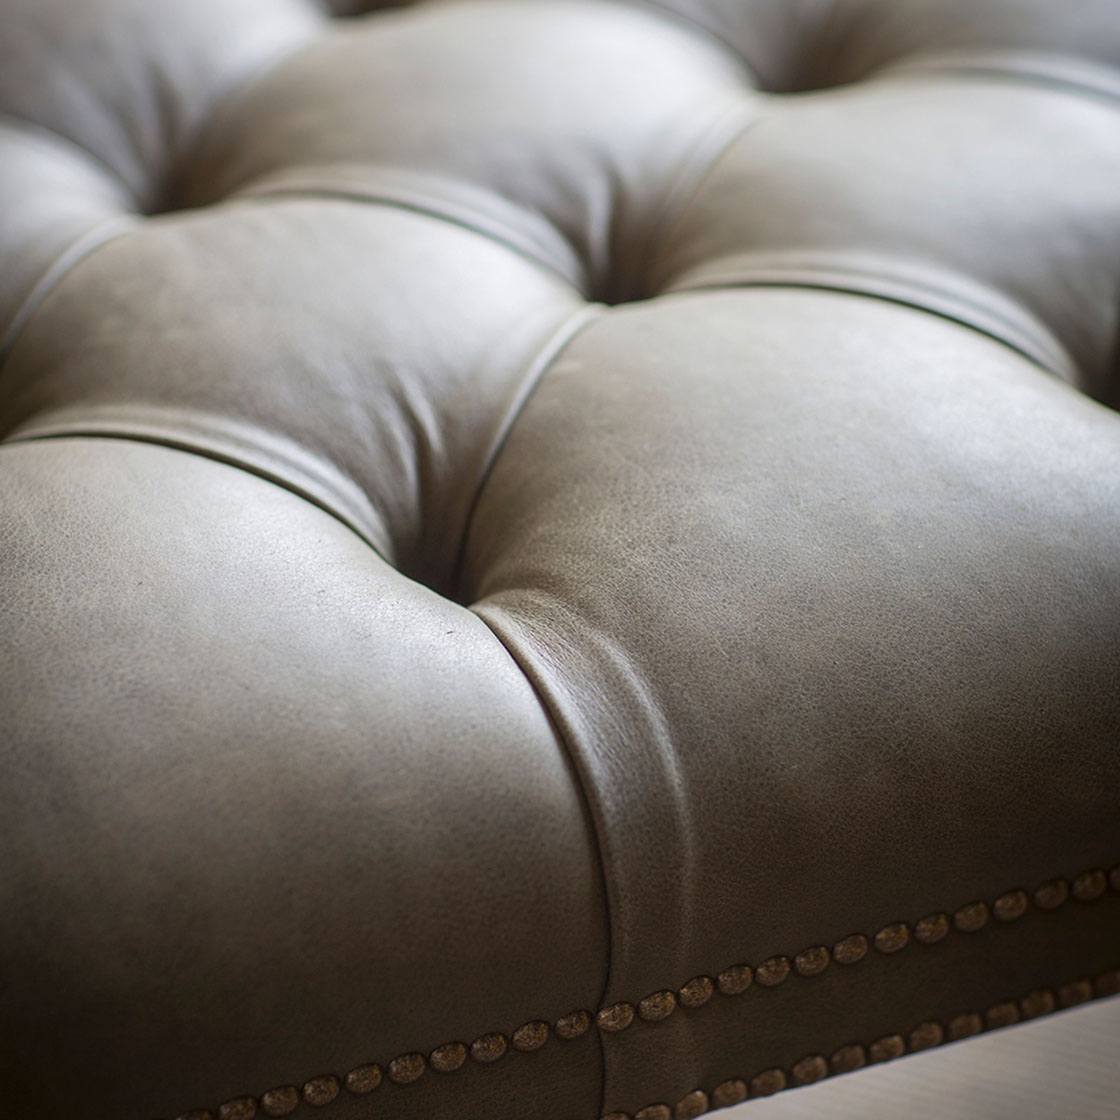 Brummel footstool in Siena leather - Sage - Beaumont & Fletcher